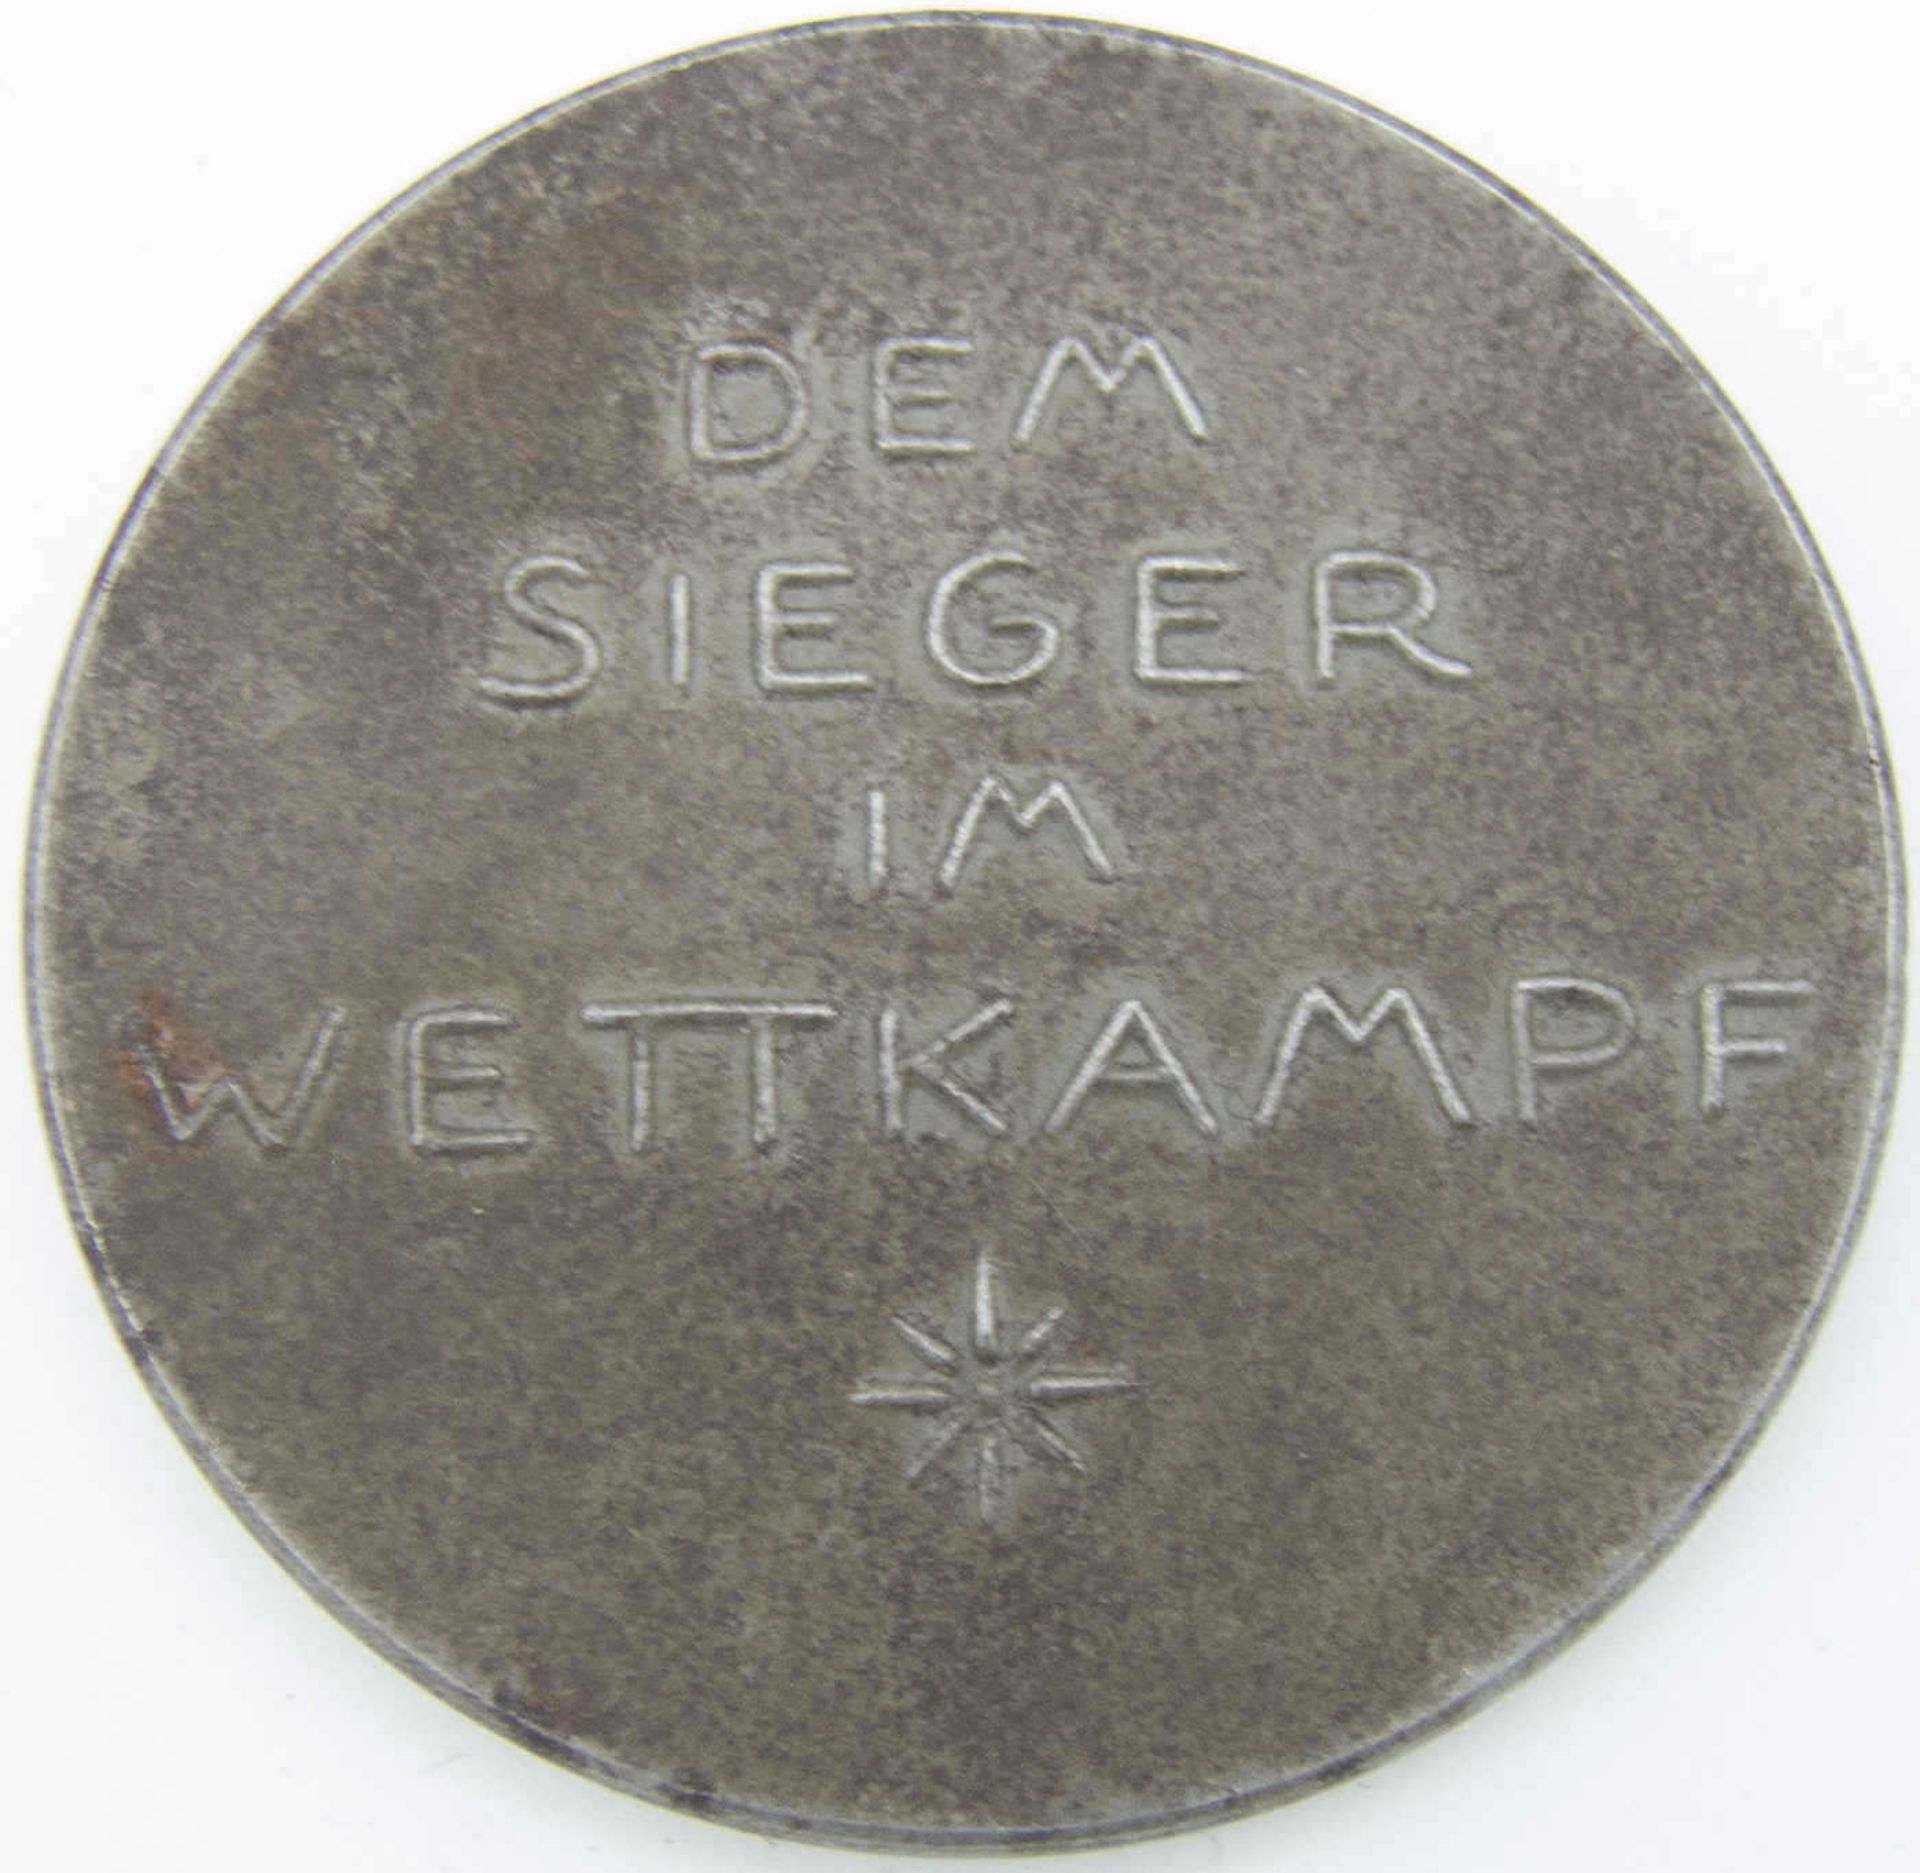 Sportmedaille, Württenbergische Jugendwehr, "Dem Sieger im Wettkampf"Sport medal, Württenberg - Image 2 of 2